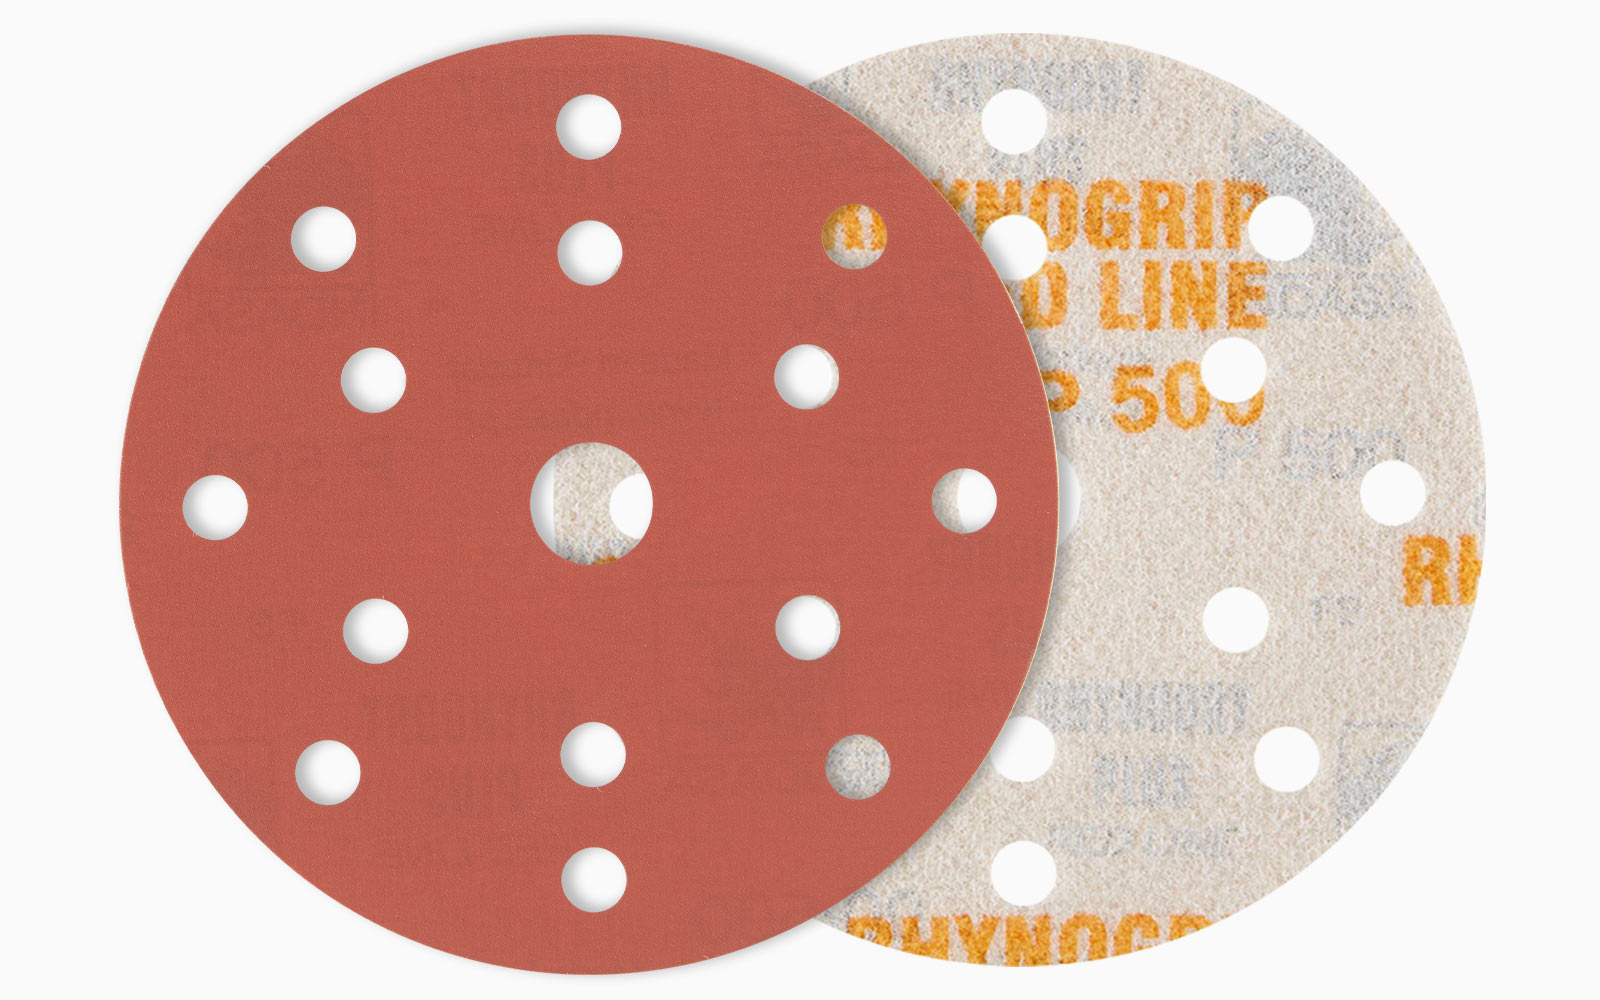 INDASA Redline XL RHYNOGRIP Hook and Loop Solid Discs 6” 36 GRIT 50/Box 